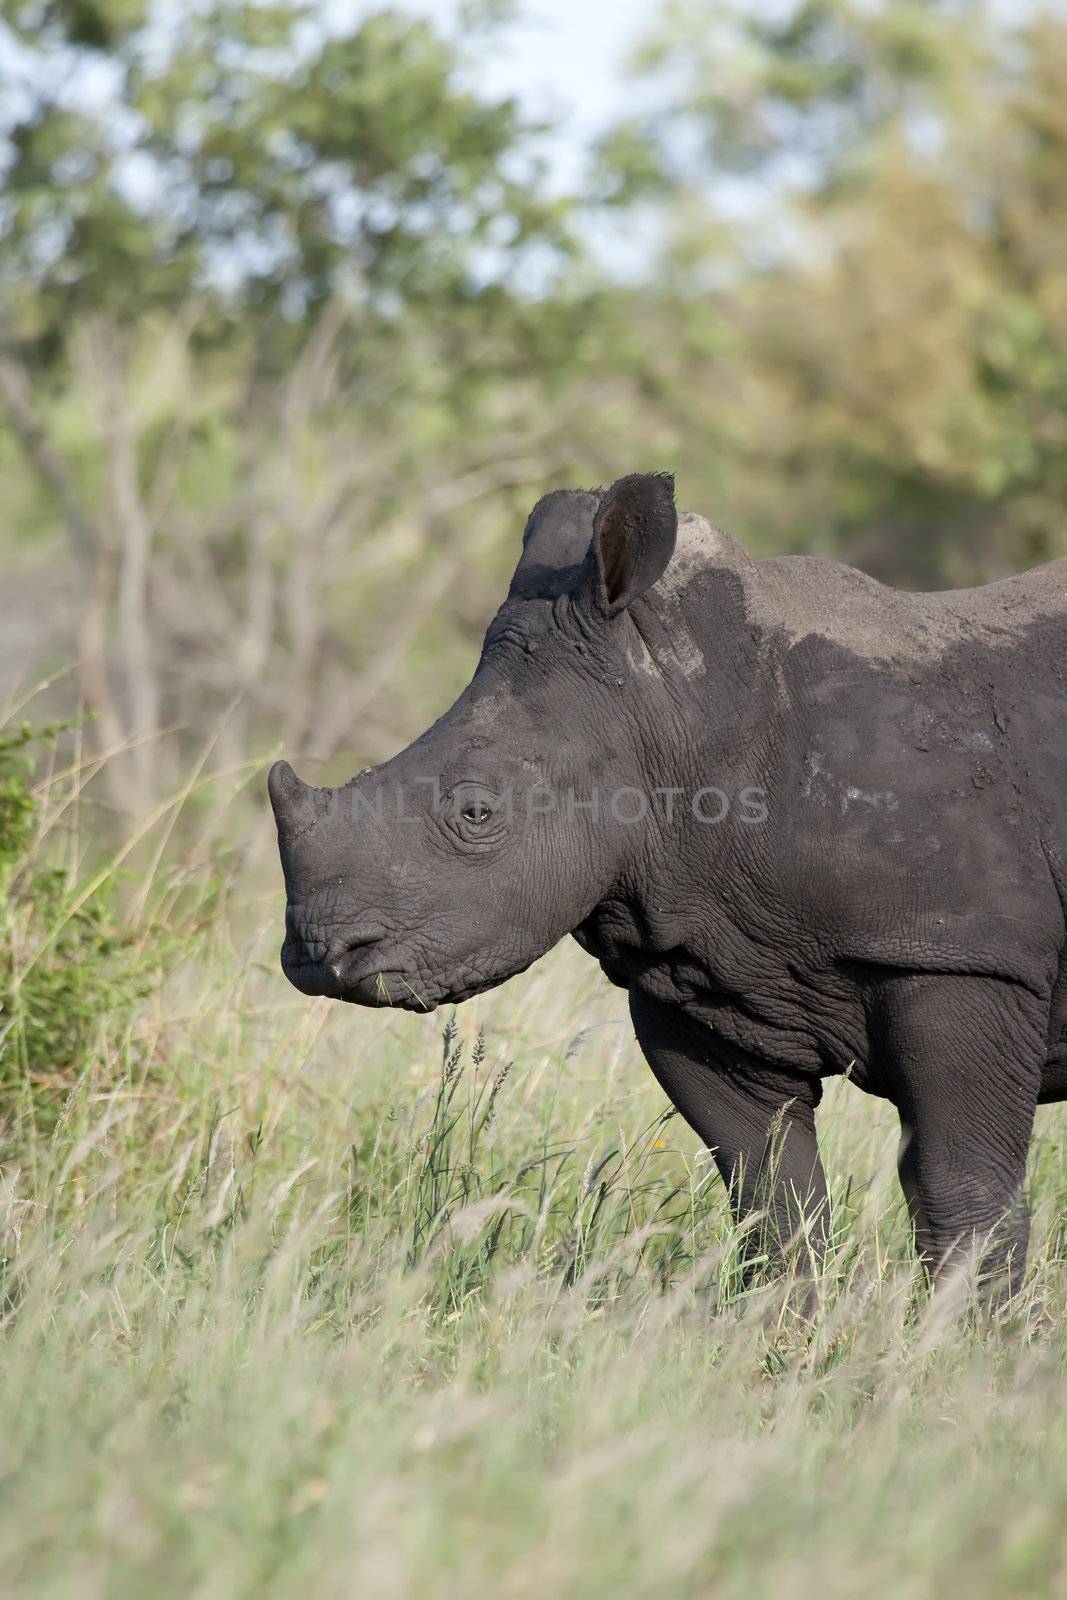 Rhino baby feeding by nightowlza